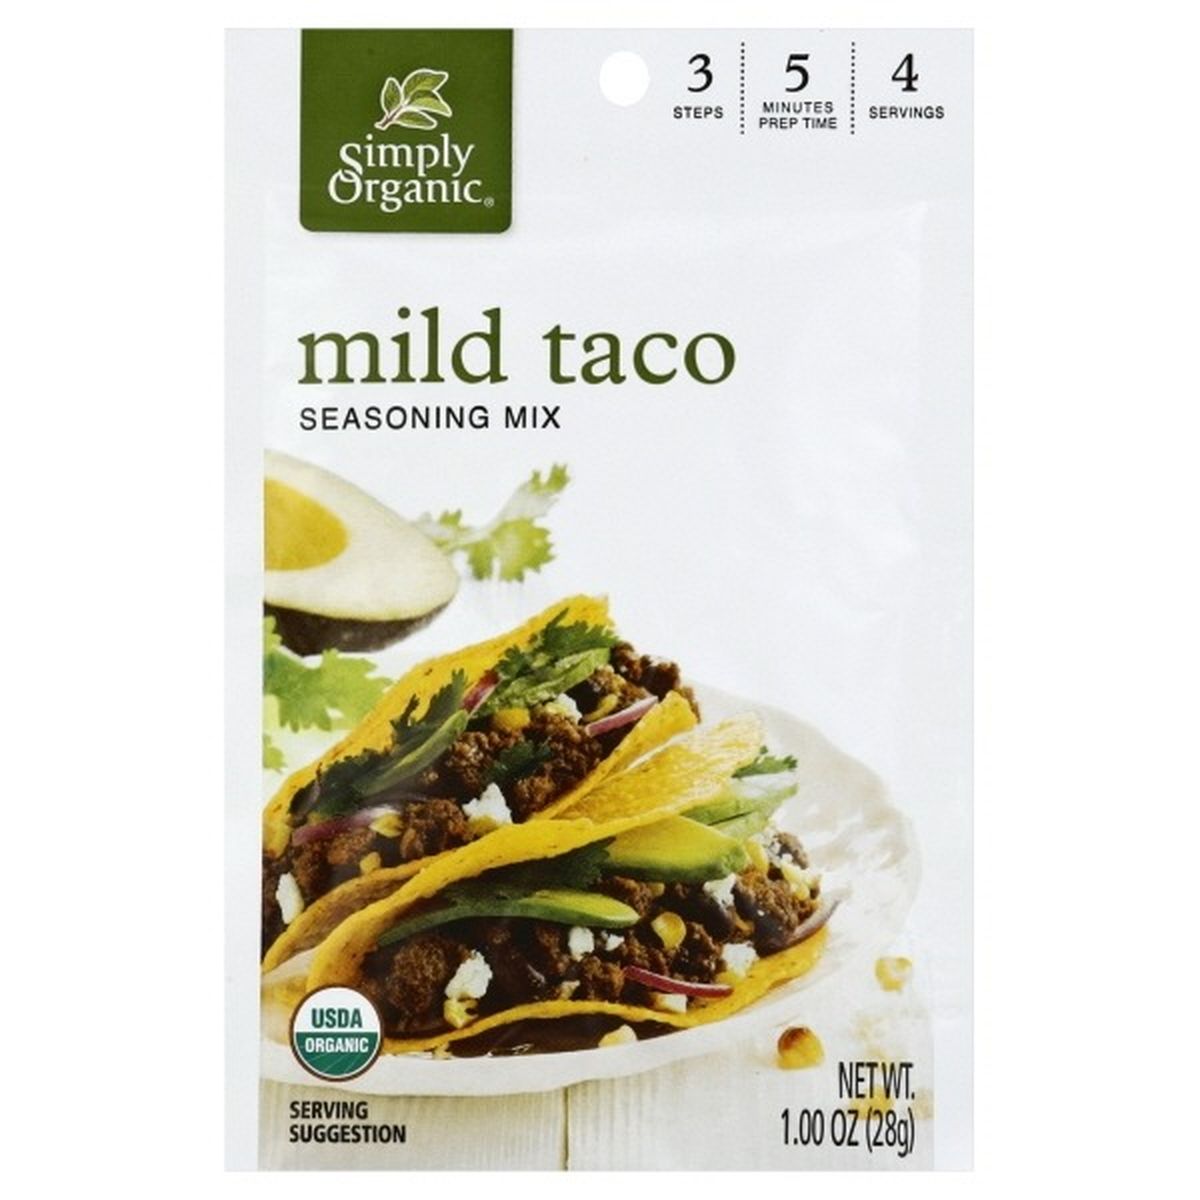 Calories in Simply Organic Seasoning Mix, Mild Taco